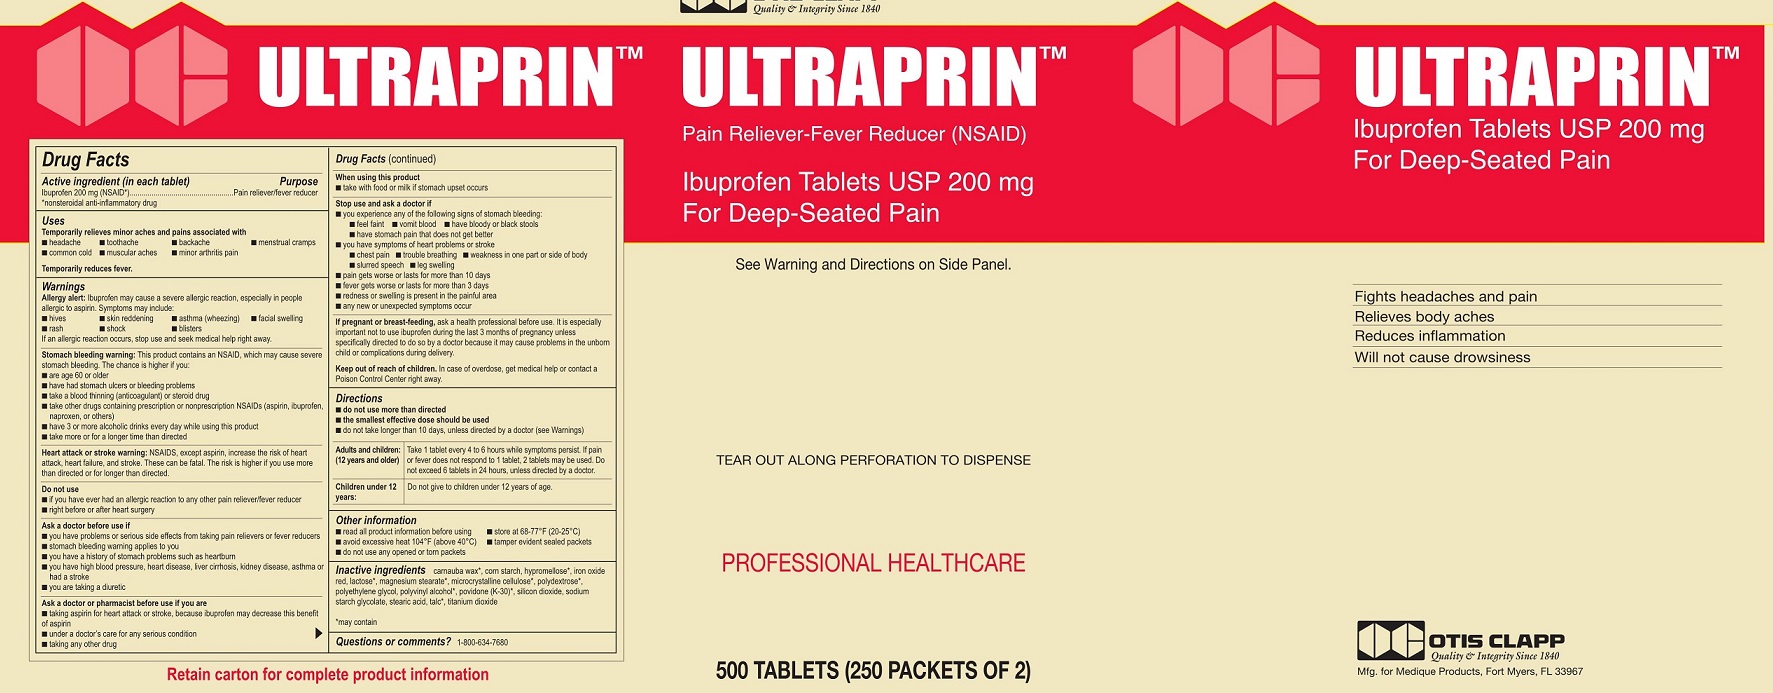 Otis Clapp Ultraprin Label 1-31-19